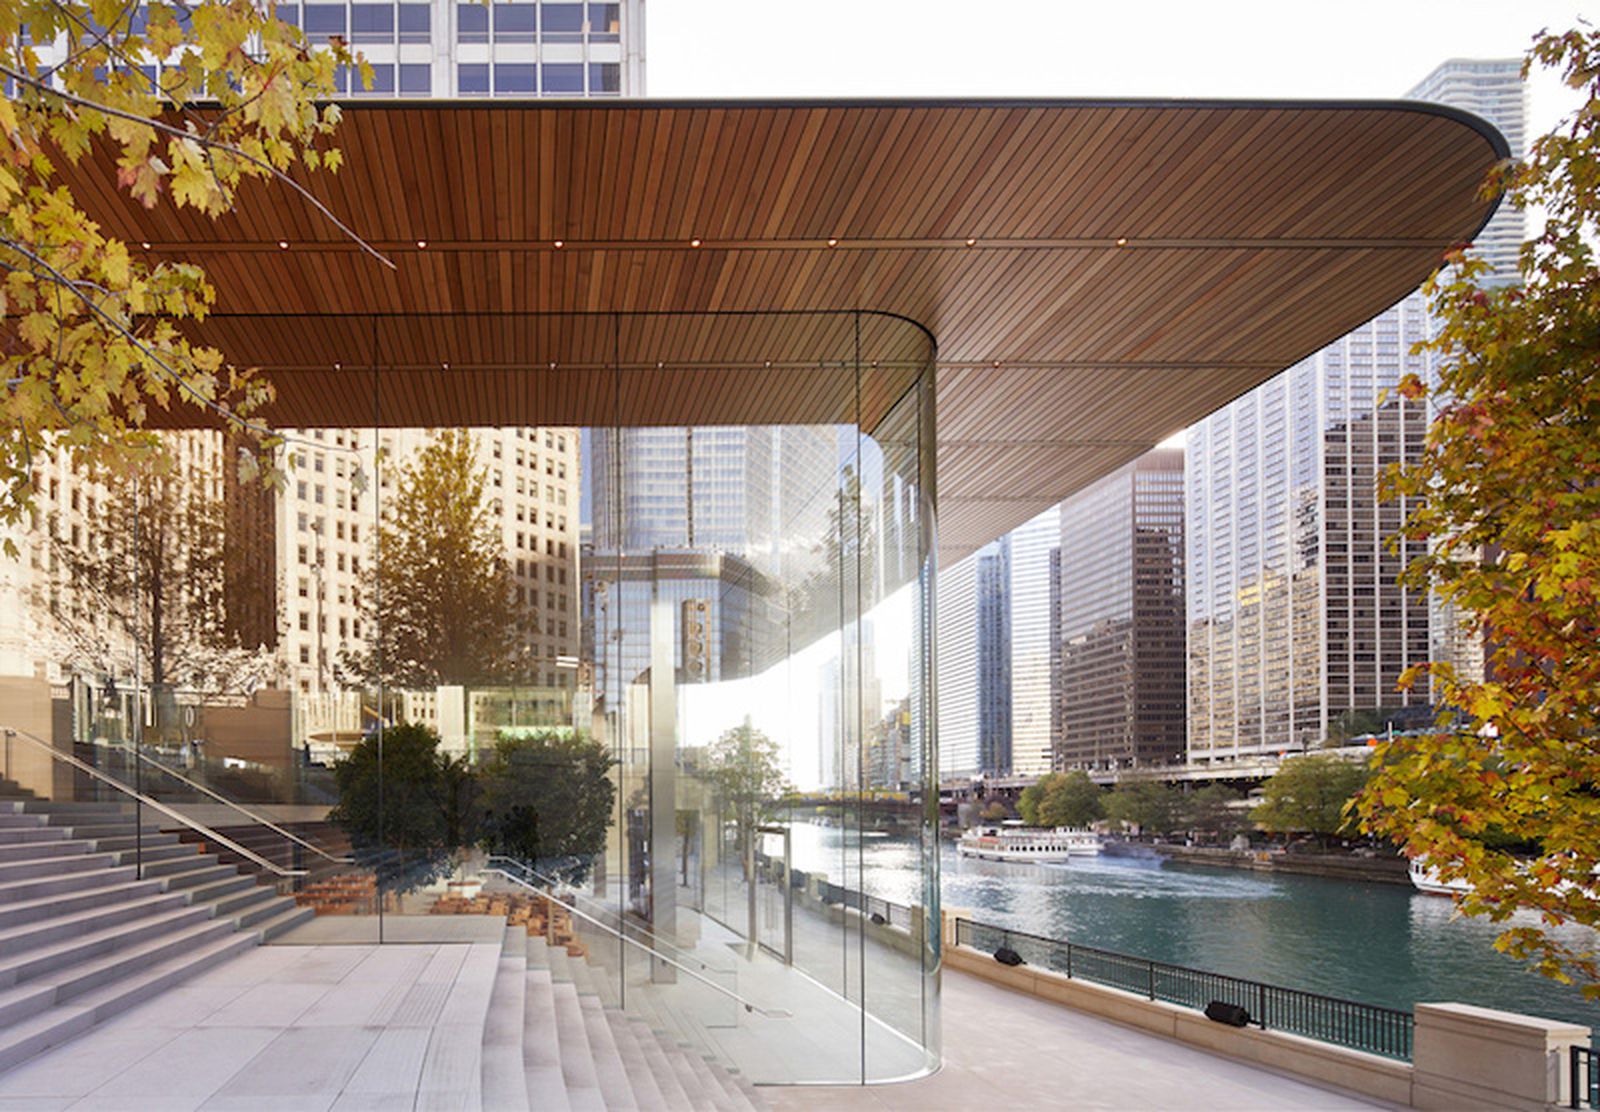 Upcoming Apple Store in Chicago Features MacBook Roof Design - MacRumors